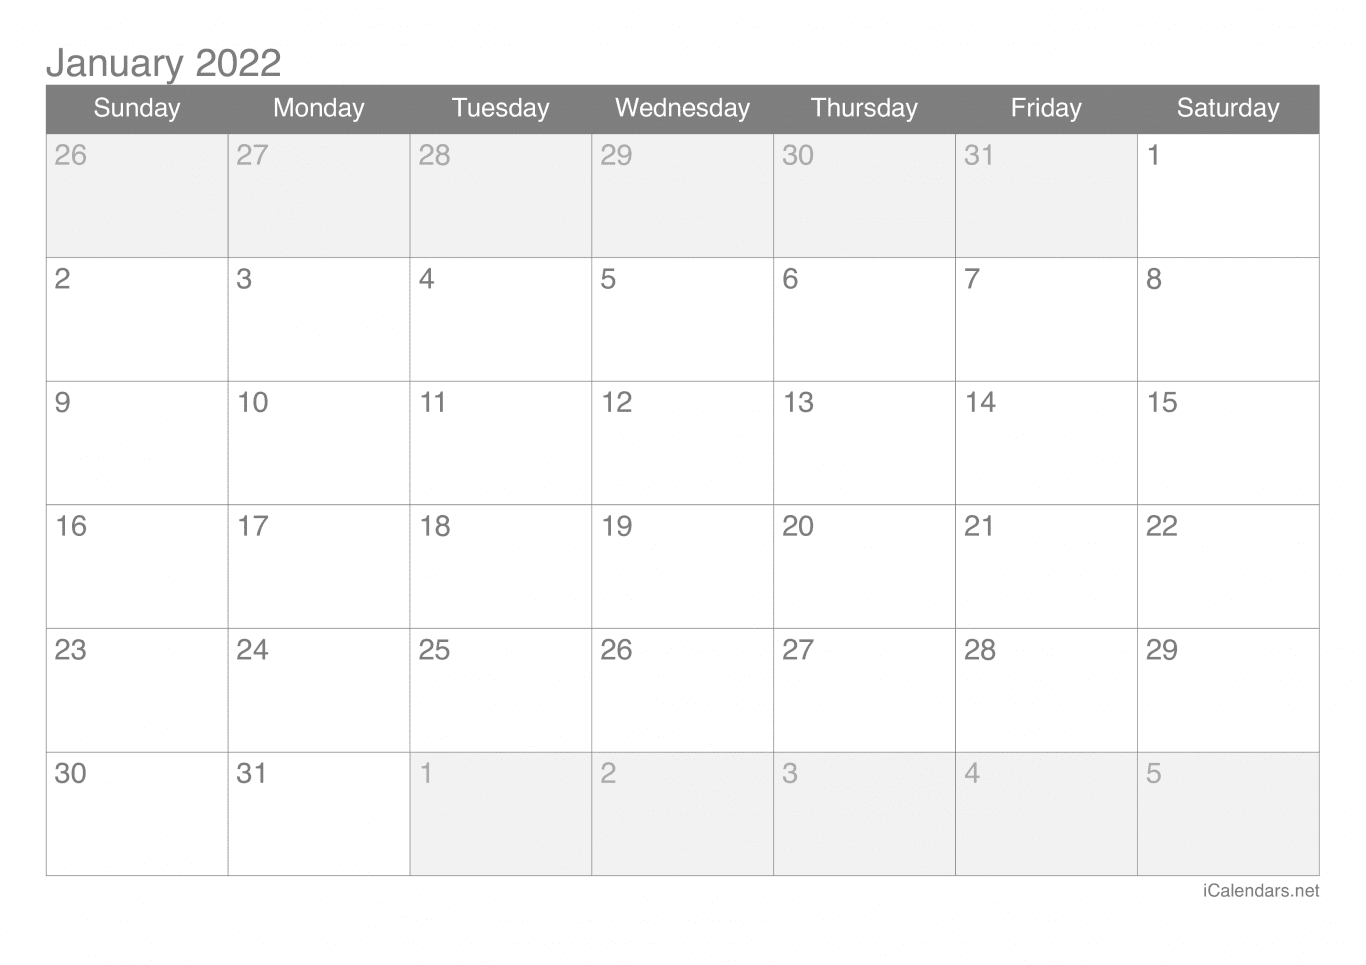 2022 January Calendar